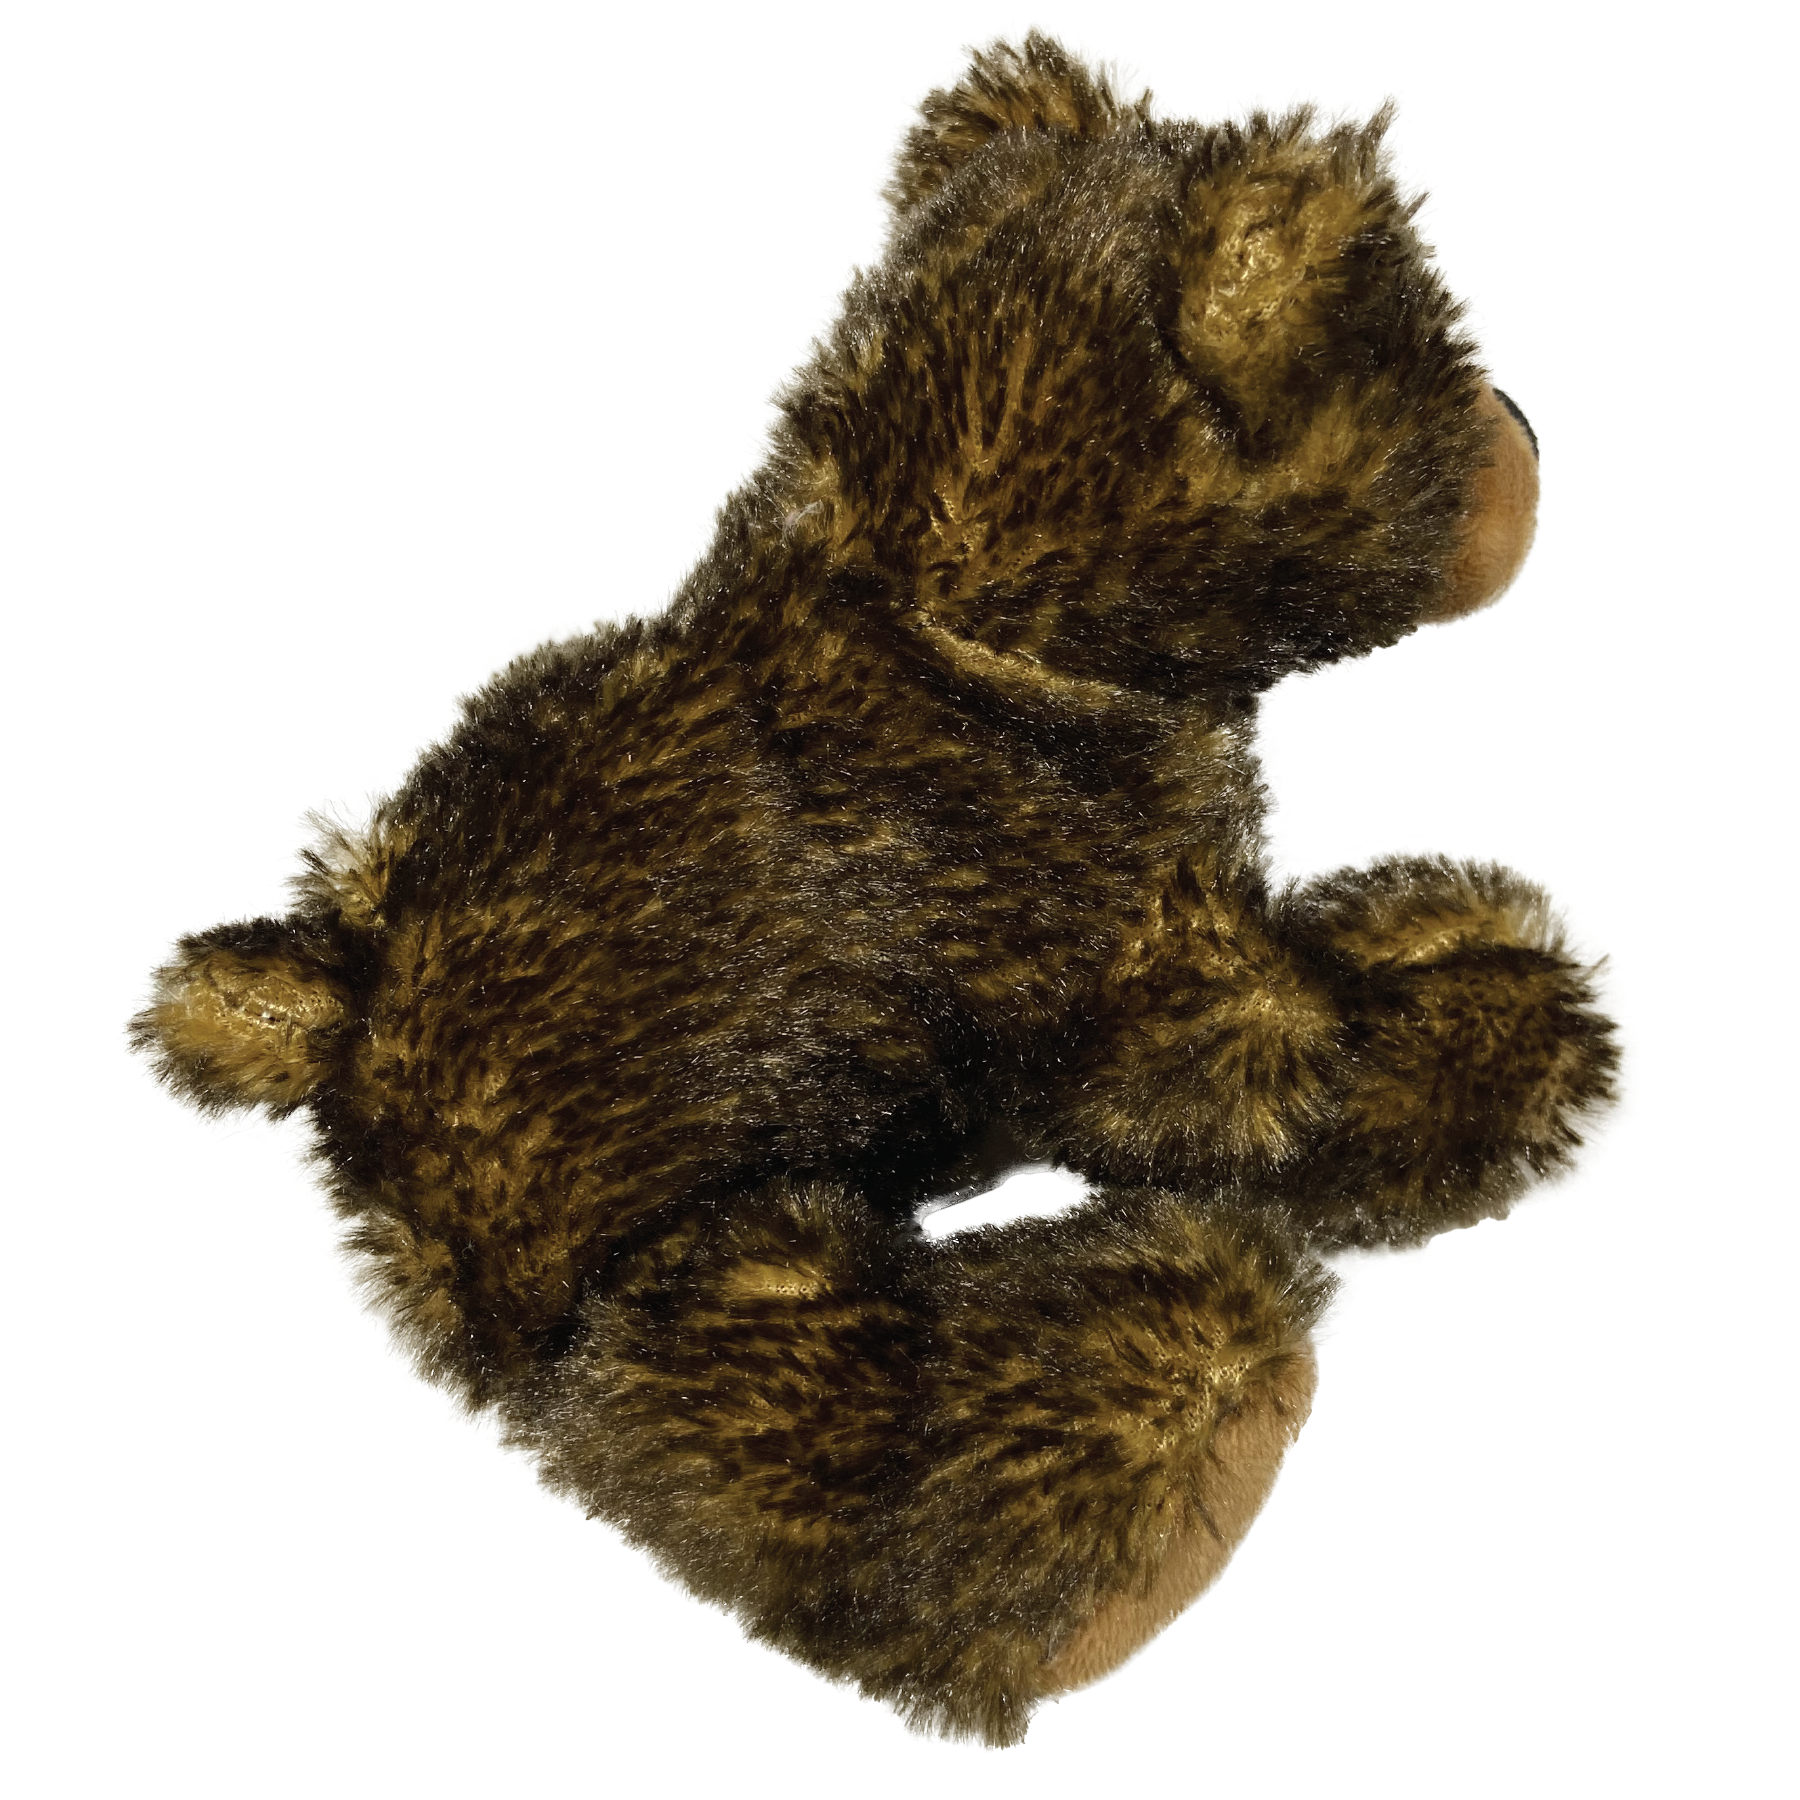 7" Maplefoot brown bear stuffed animal side view